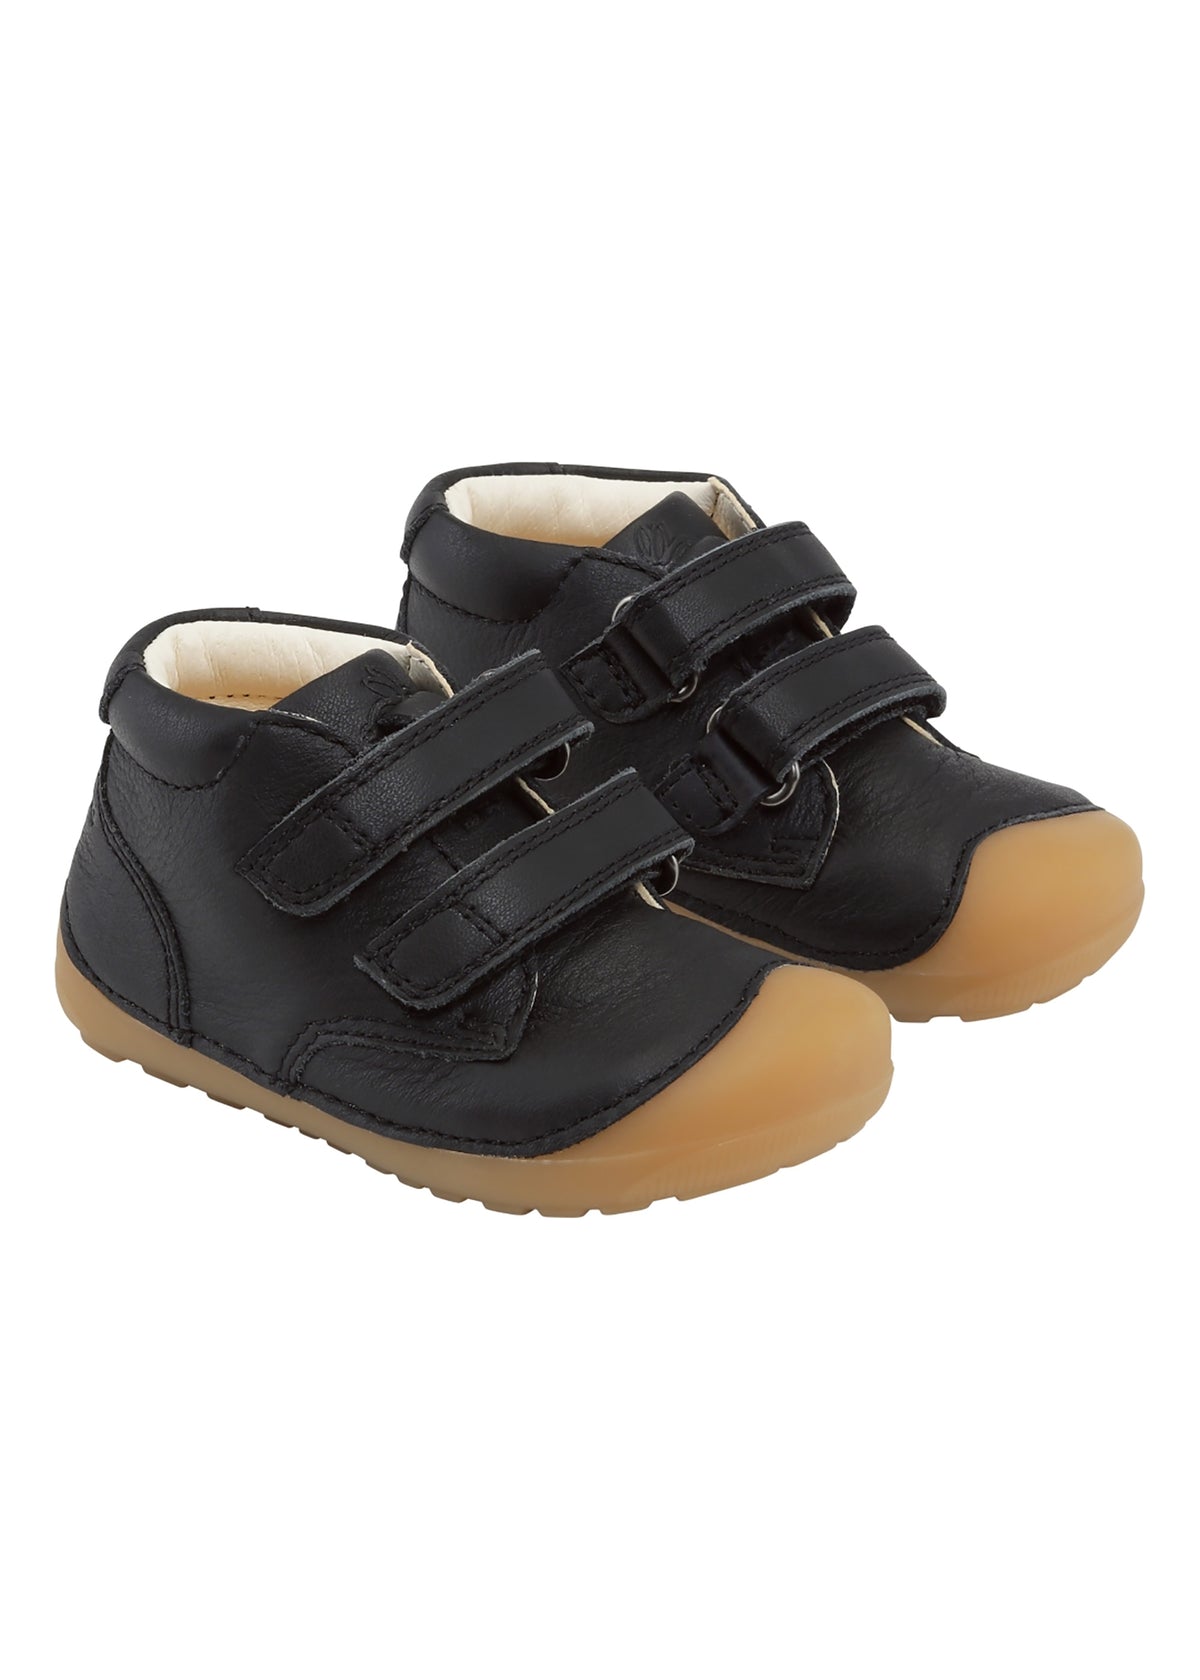 Lasten tarratennarit - Petit Velcro, musta, Bundgaard Zero Heel